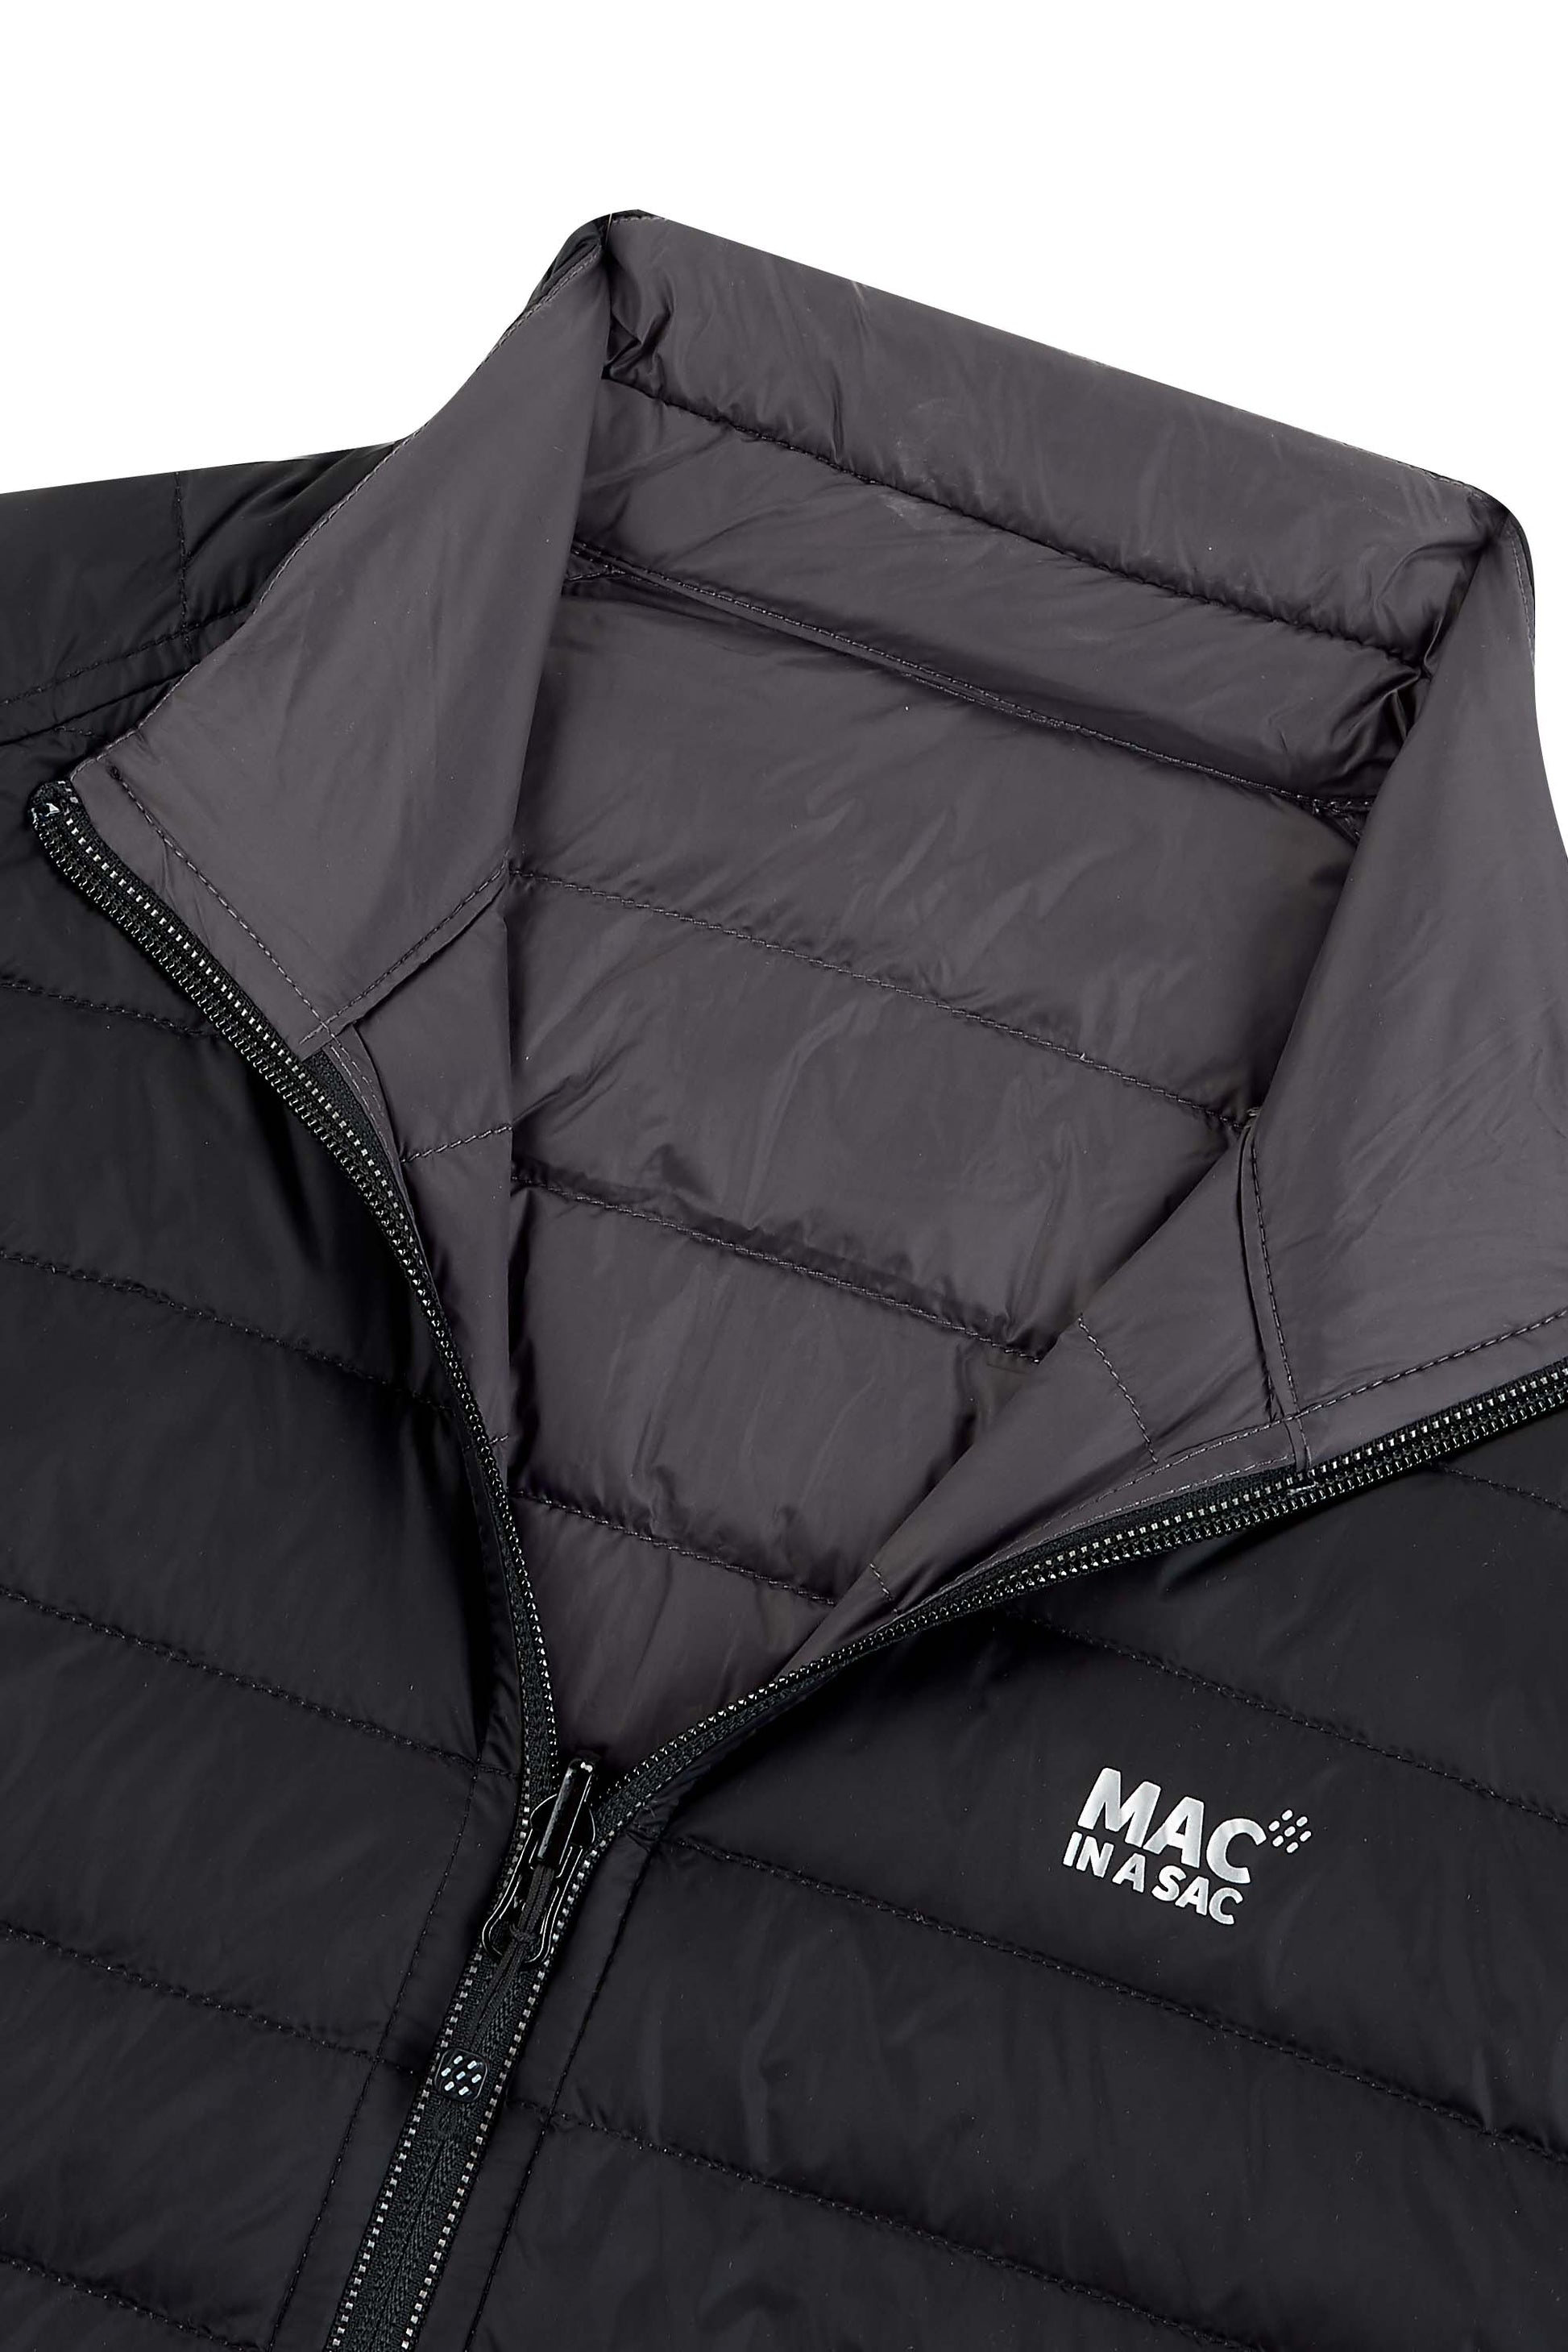 Mac In A Sac Polar2 Down Reversible (Men's) - Jet Black/Charcoal